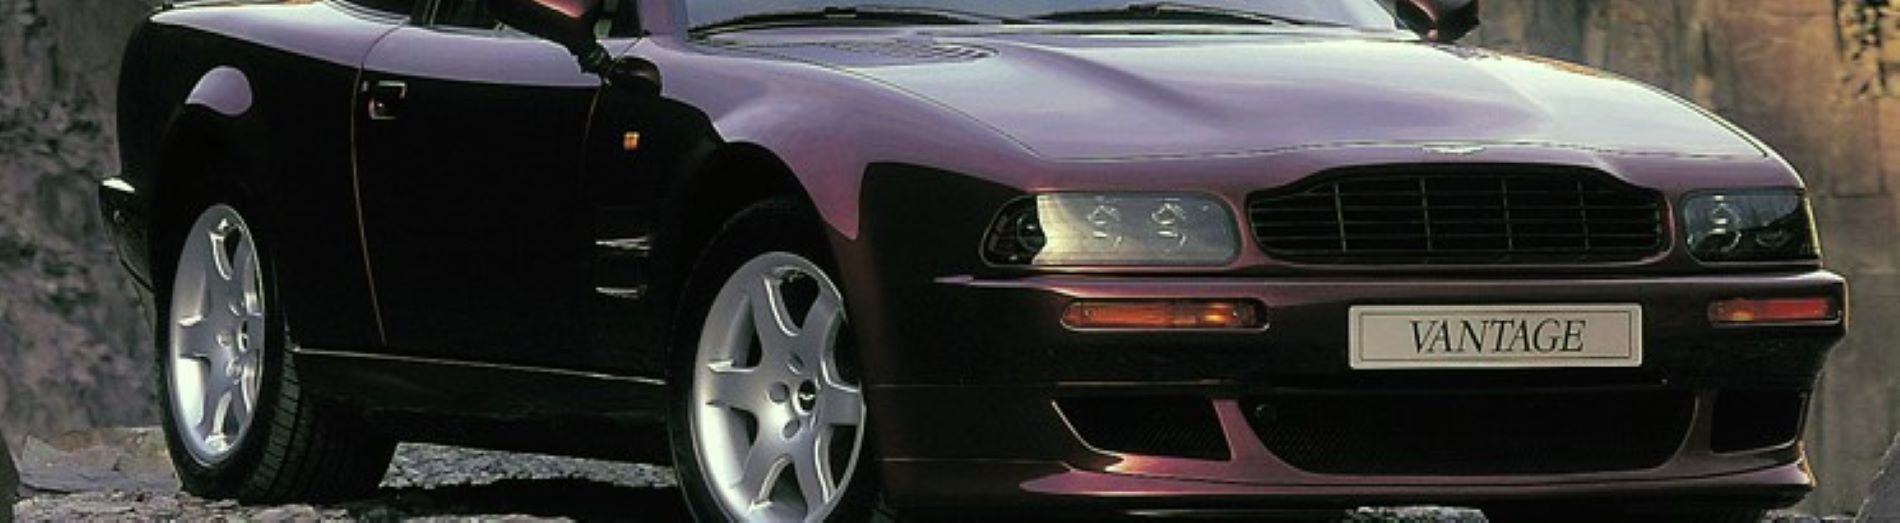 Aston Martin V8 Vantage Le Mans (V600) 1999 - 2000, a British automaker's luxury sports car